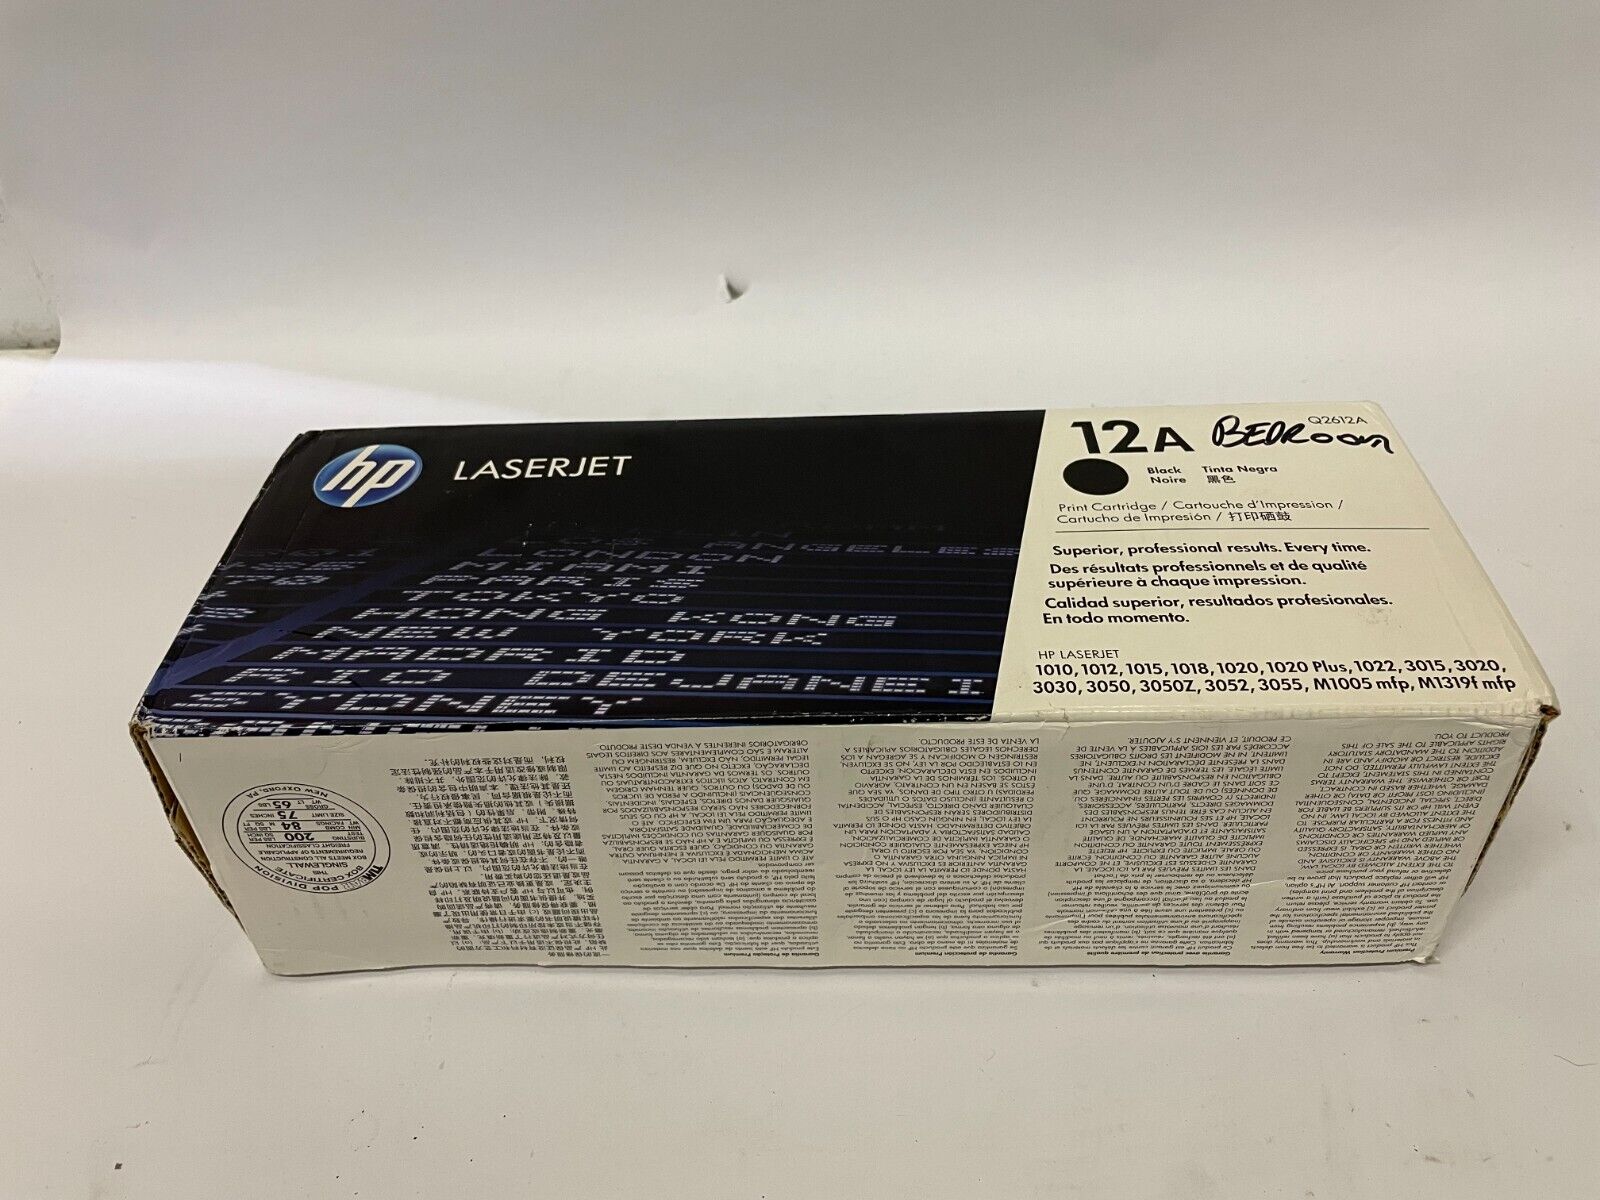 HP LaserJet Q2612A 12A Black Toner Cartridge